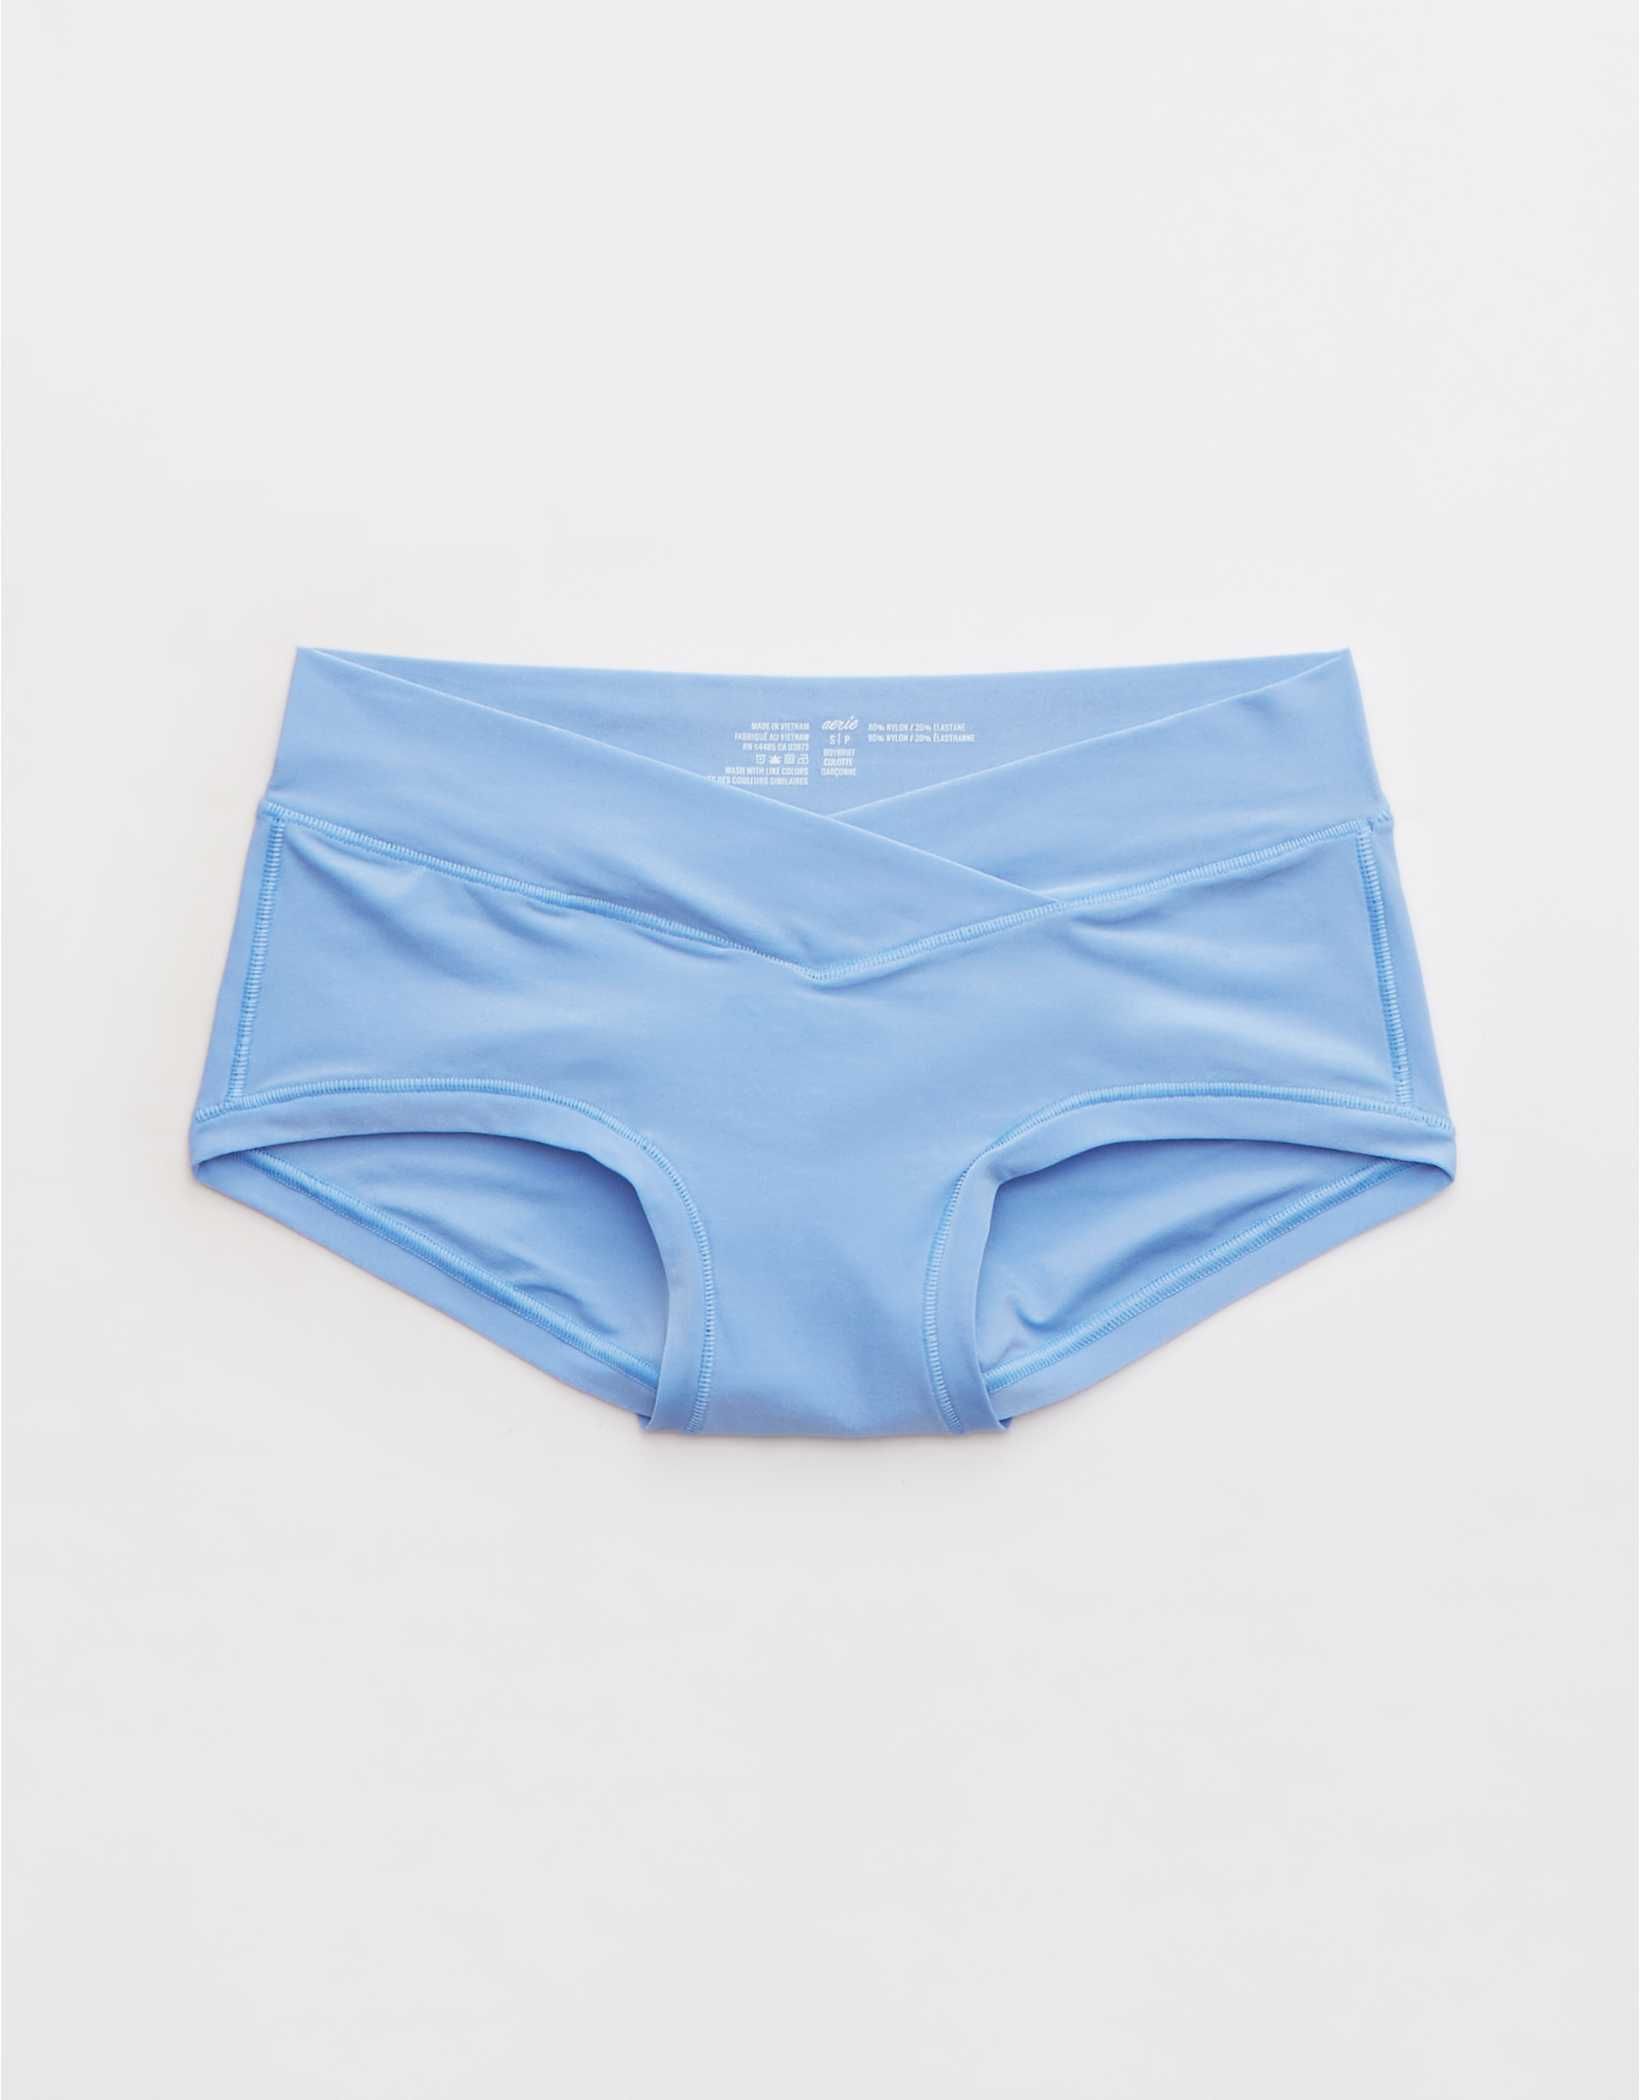 Aerie Real Me Crossover Boybrief Underwear | Aerie